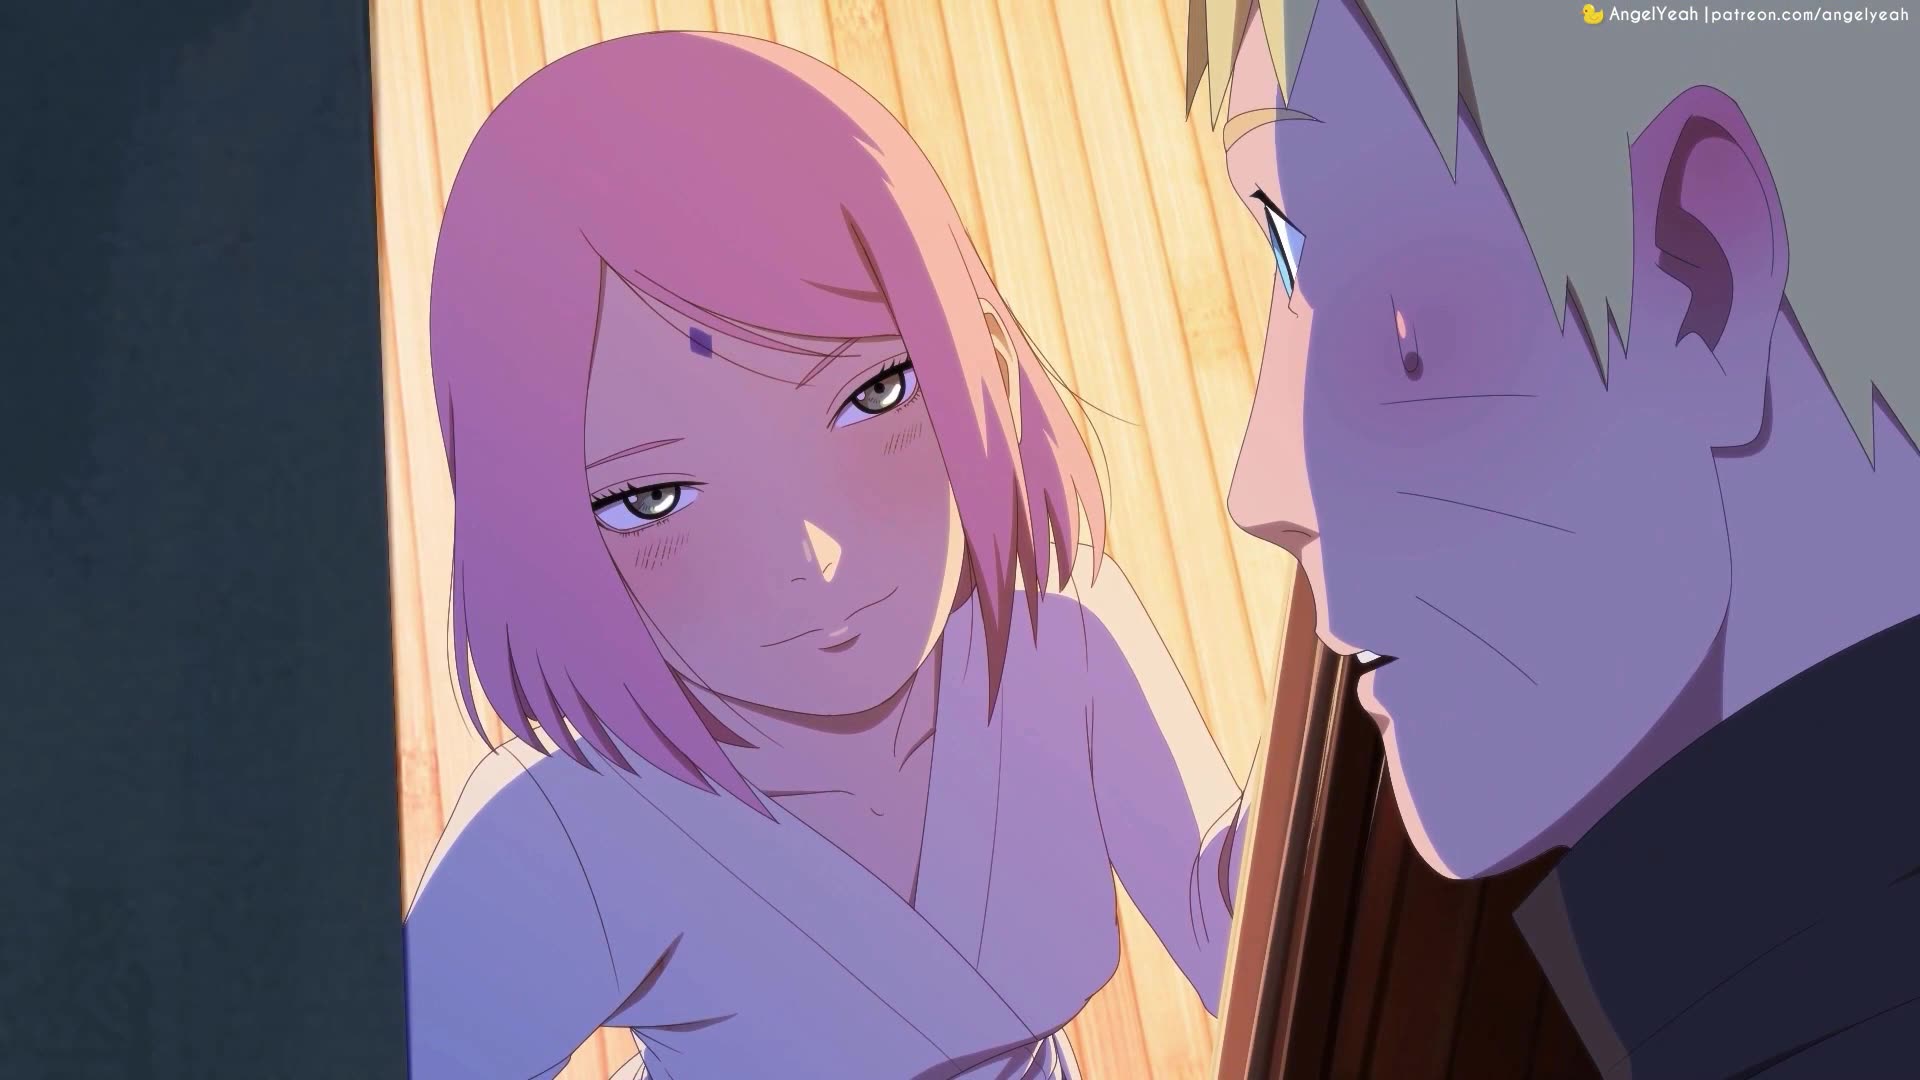 Oficial Sound) Sakura and Naruto - A visit 4Kangelyeah